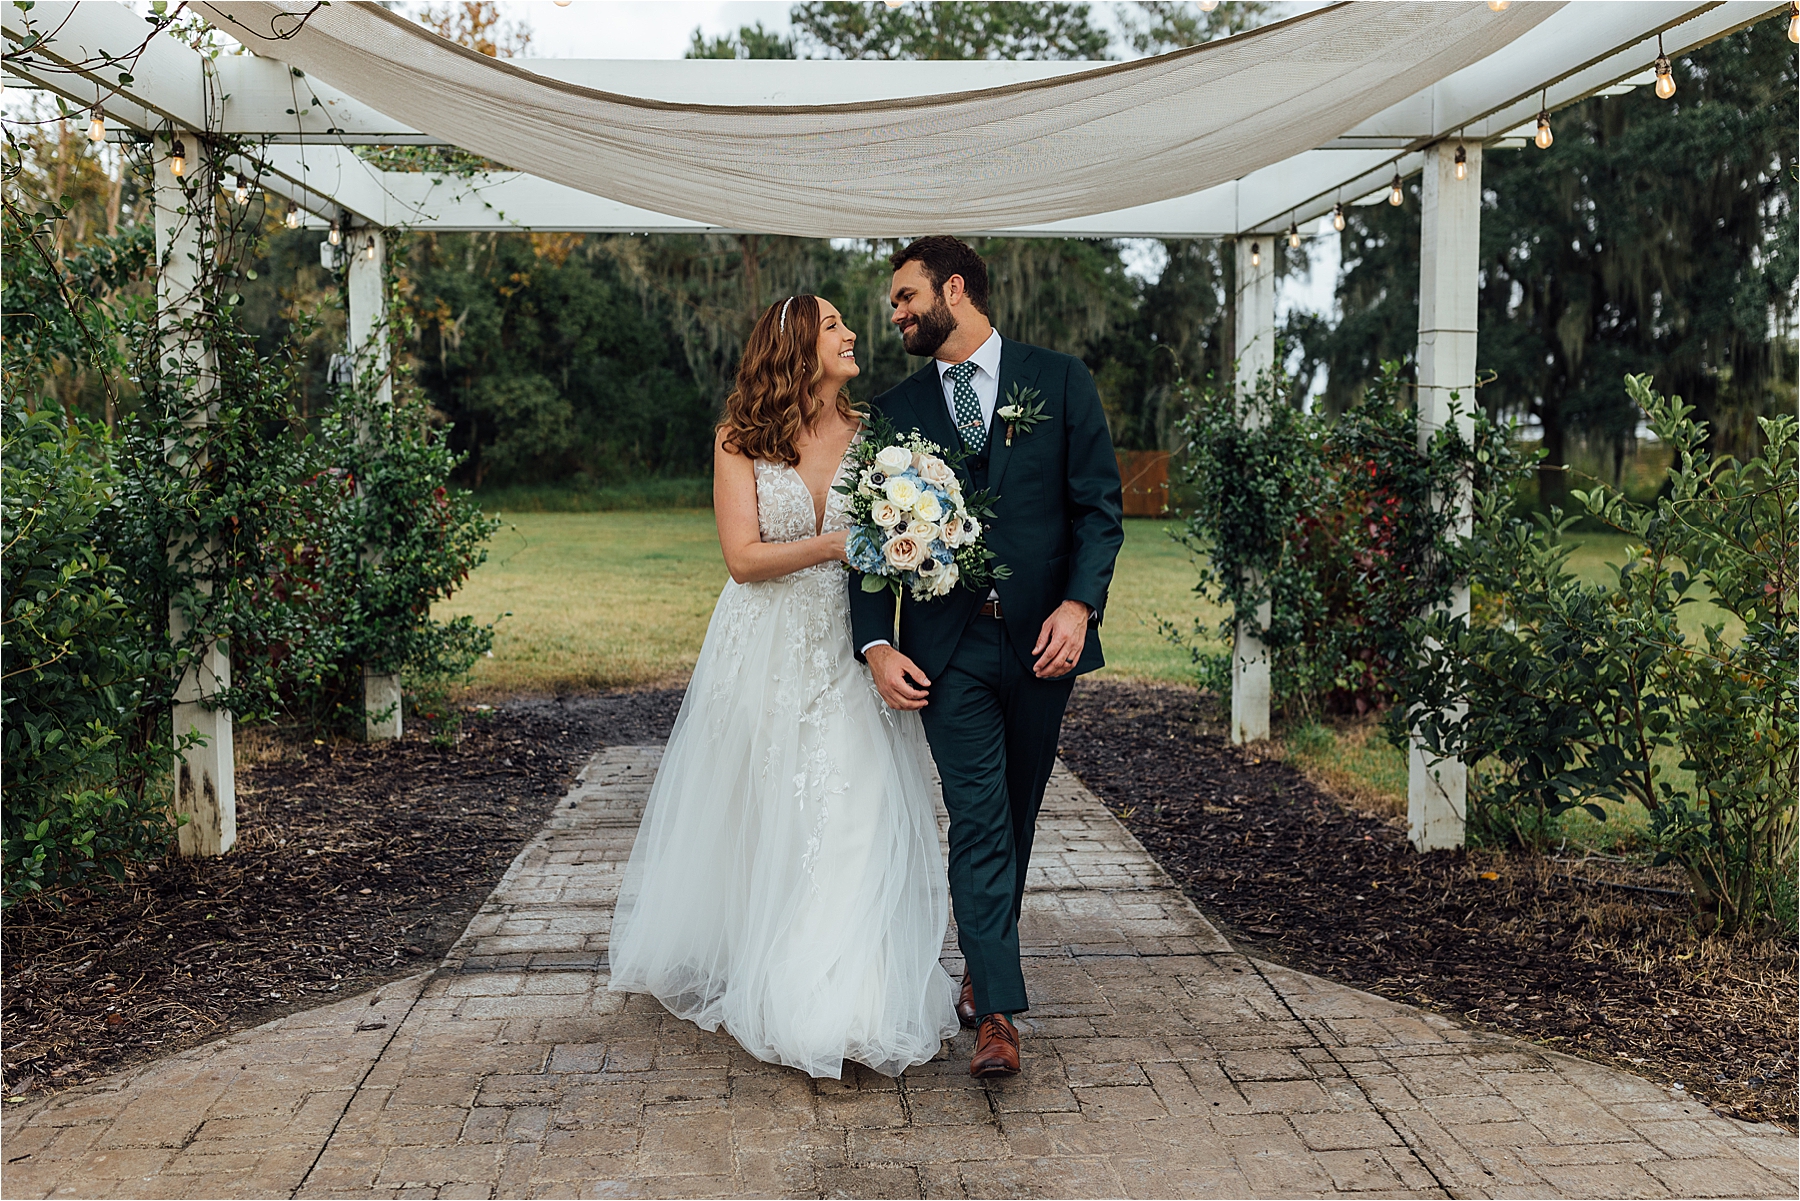 Lakesong Wedding Plant City Florida Tampa Wedding Photographer, Wedding inspiration